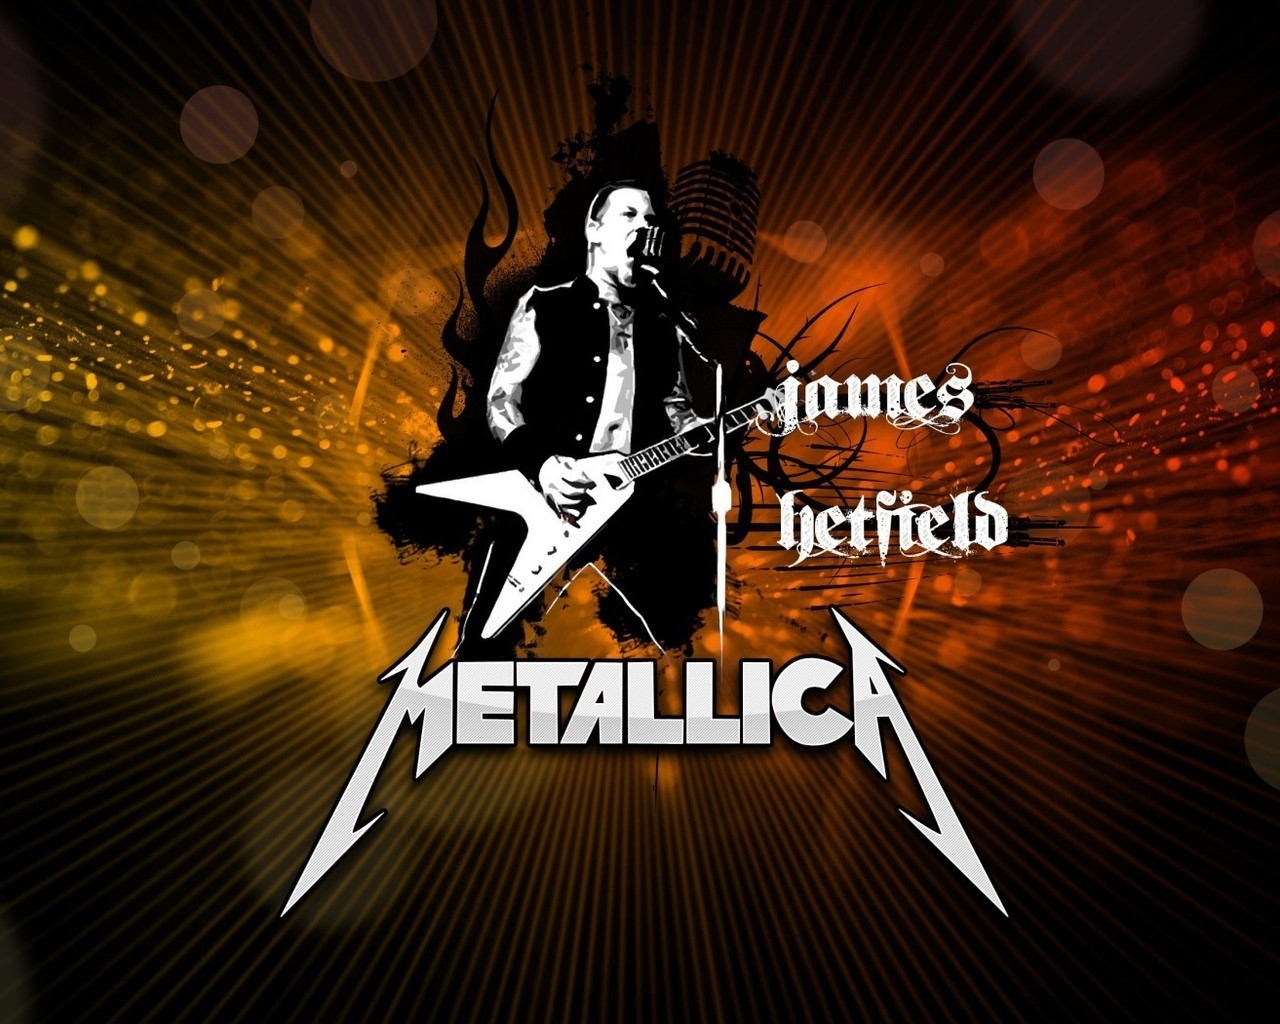 James Hetfield Metallica Poster for 1280 x 1024 resolution